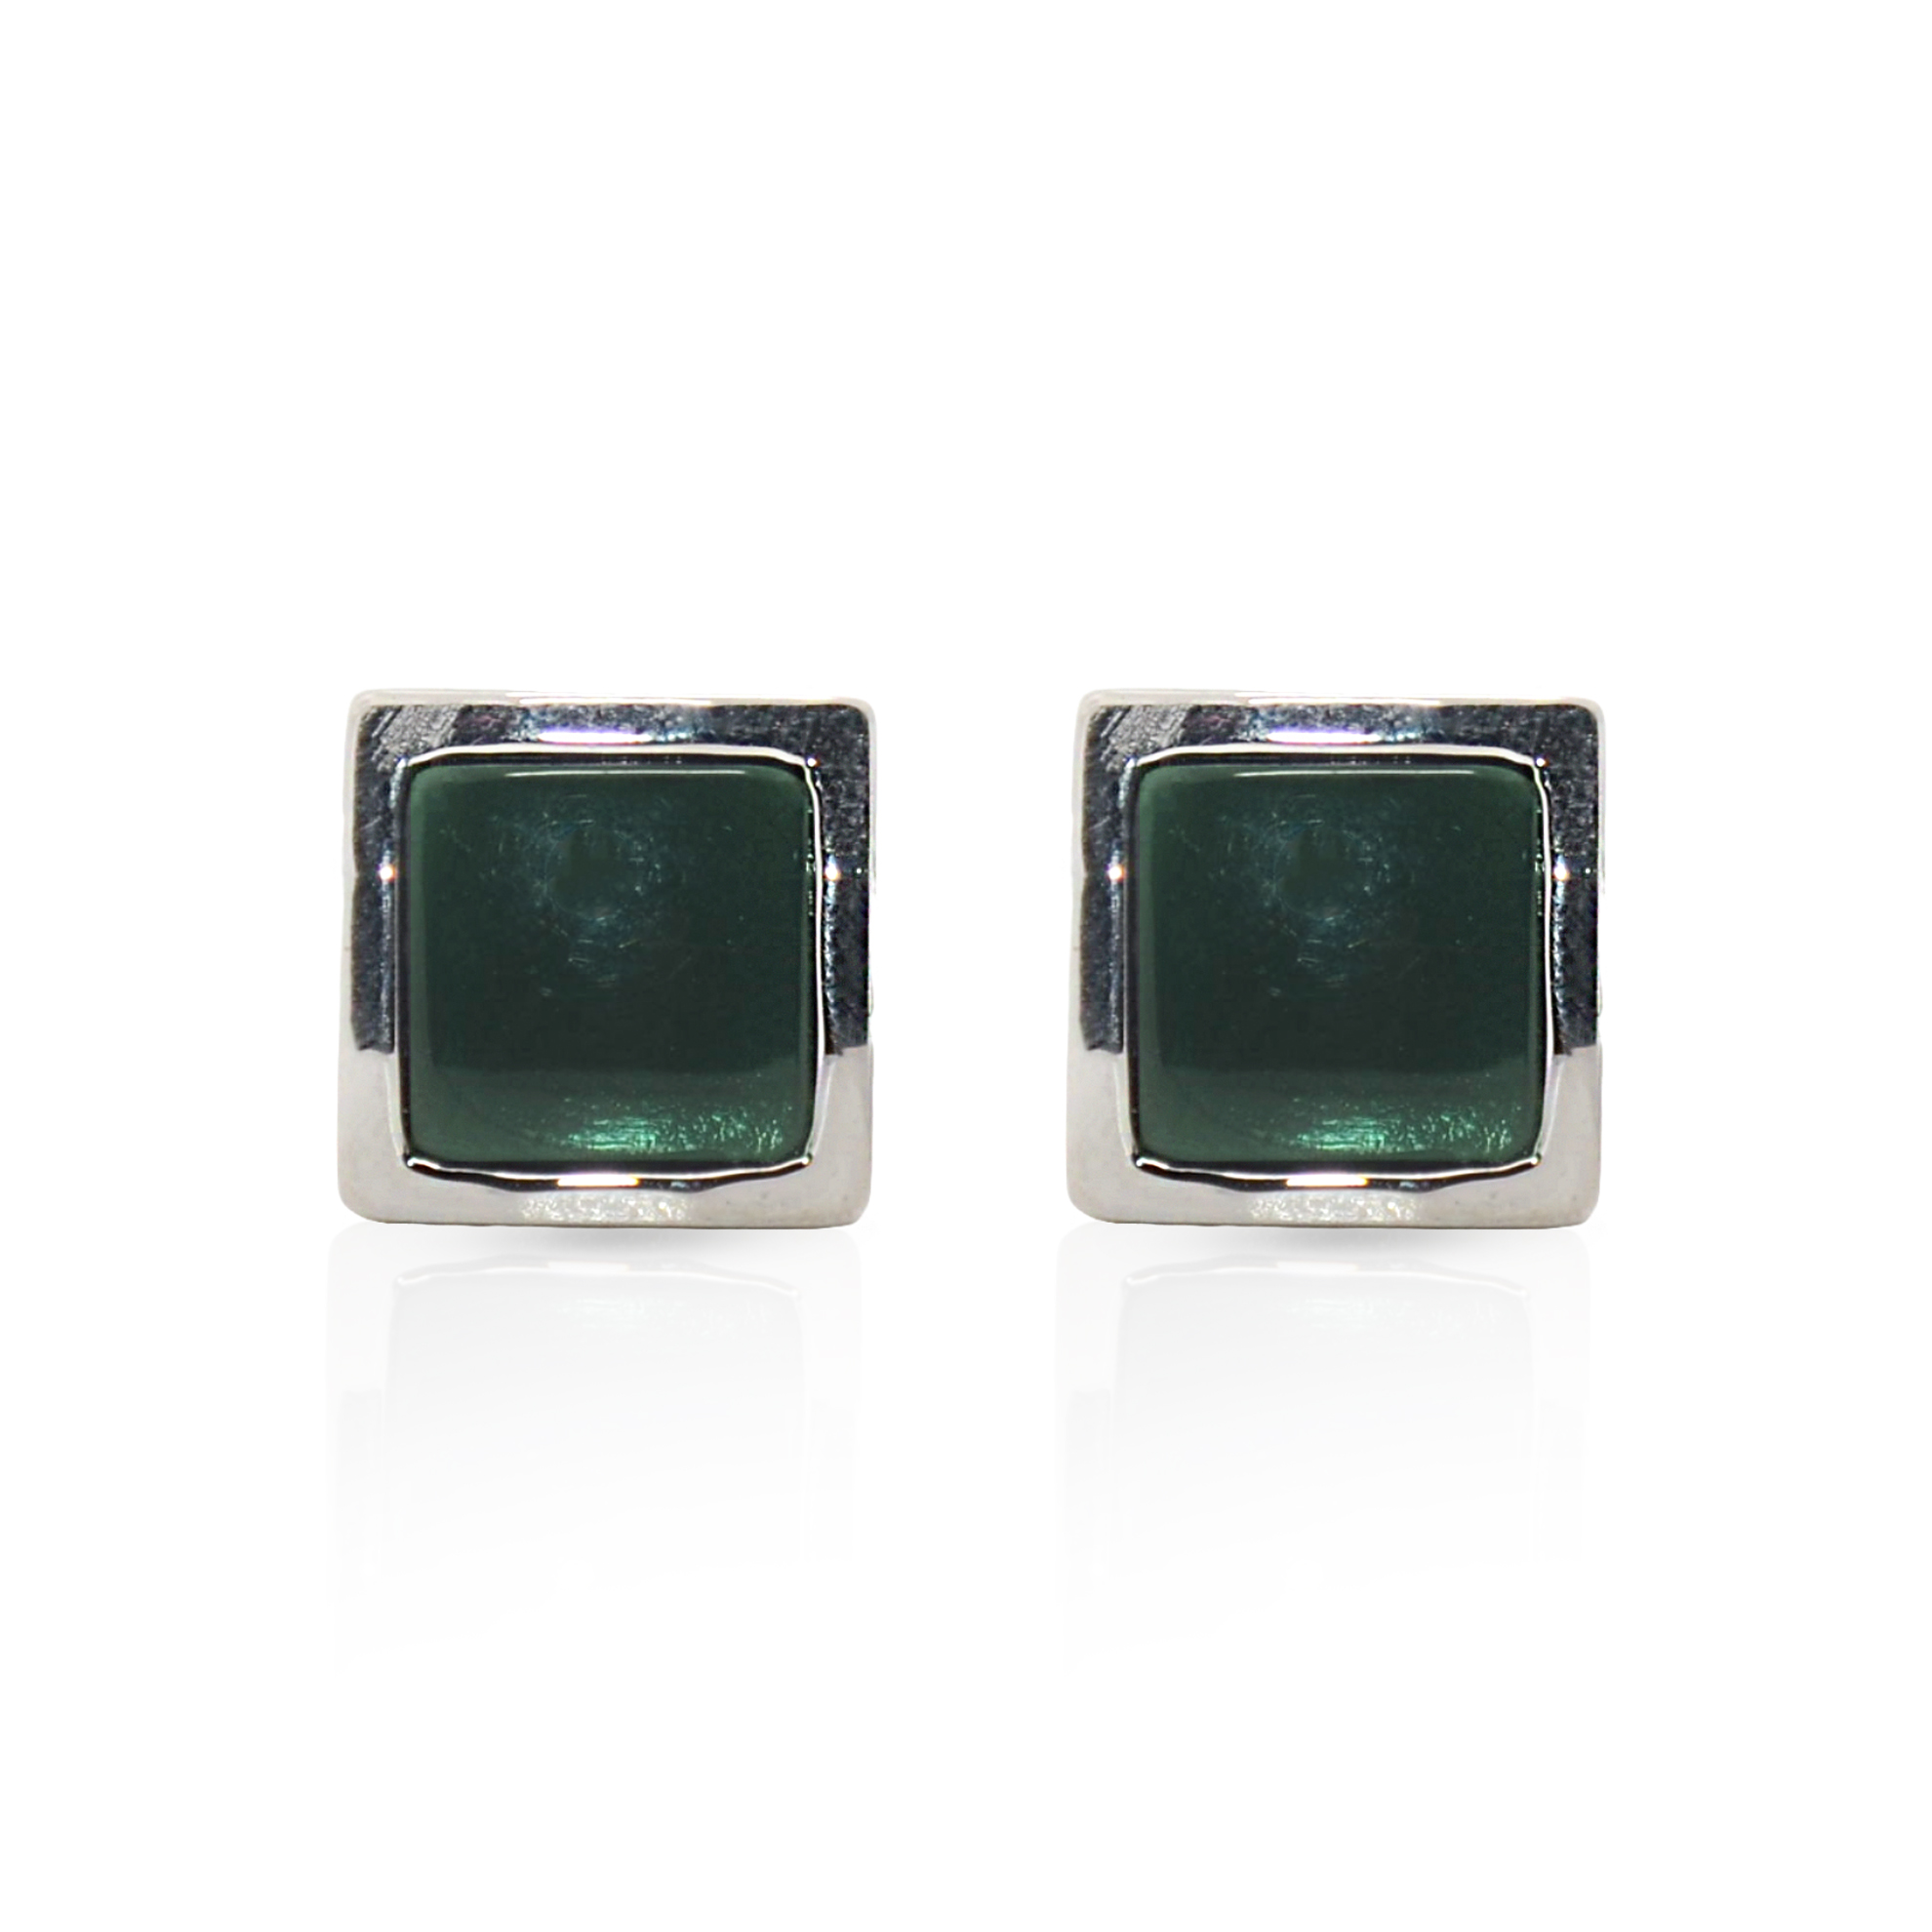 Cufflers Novelty Black Box Cufflinks with Free Gift Box – CU-2028 – Green